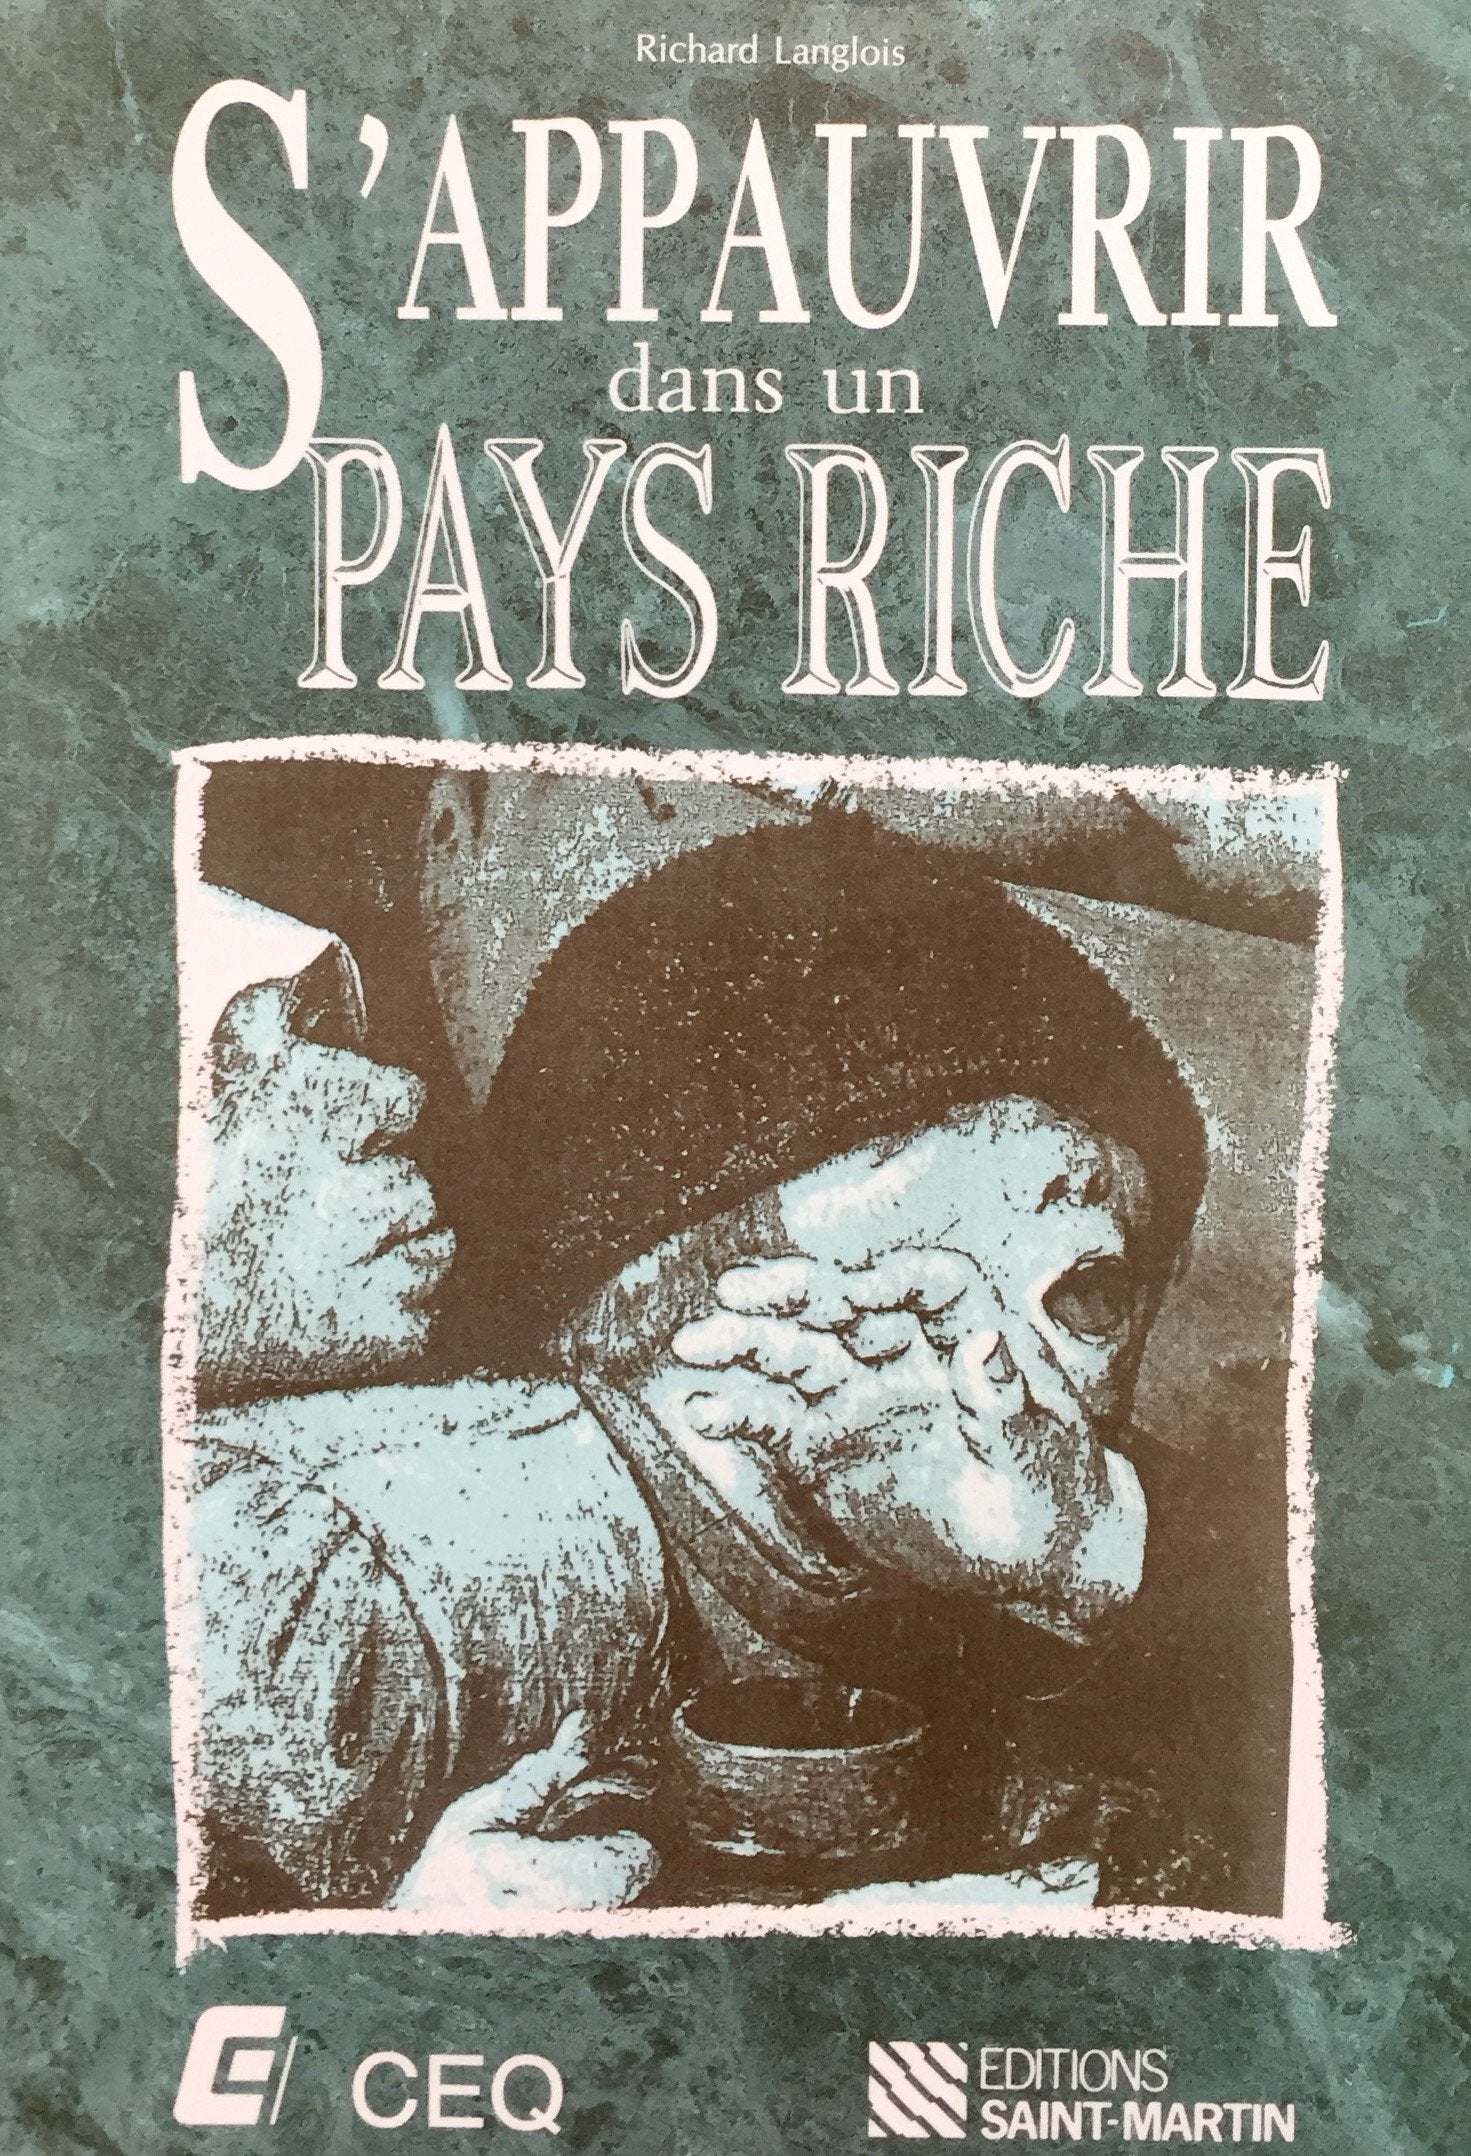 Livre ISBN 2890351807 S'appauvrir dans un pays riche (Richard Langlois)